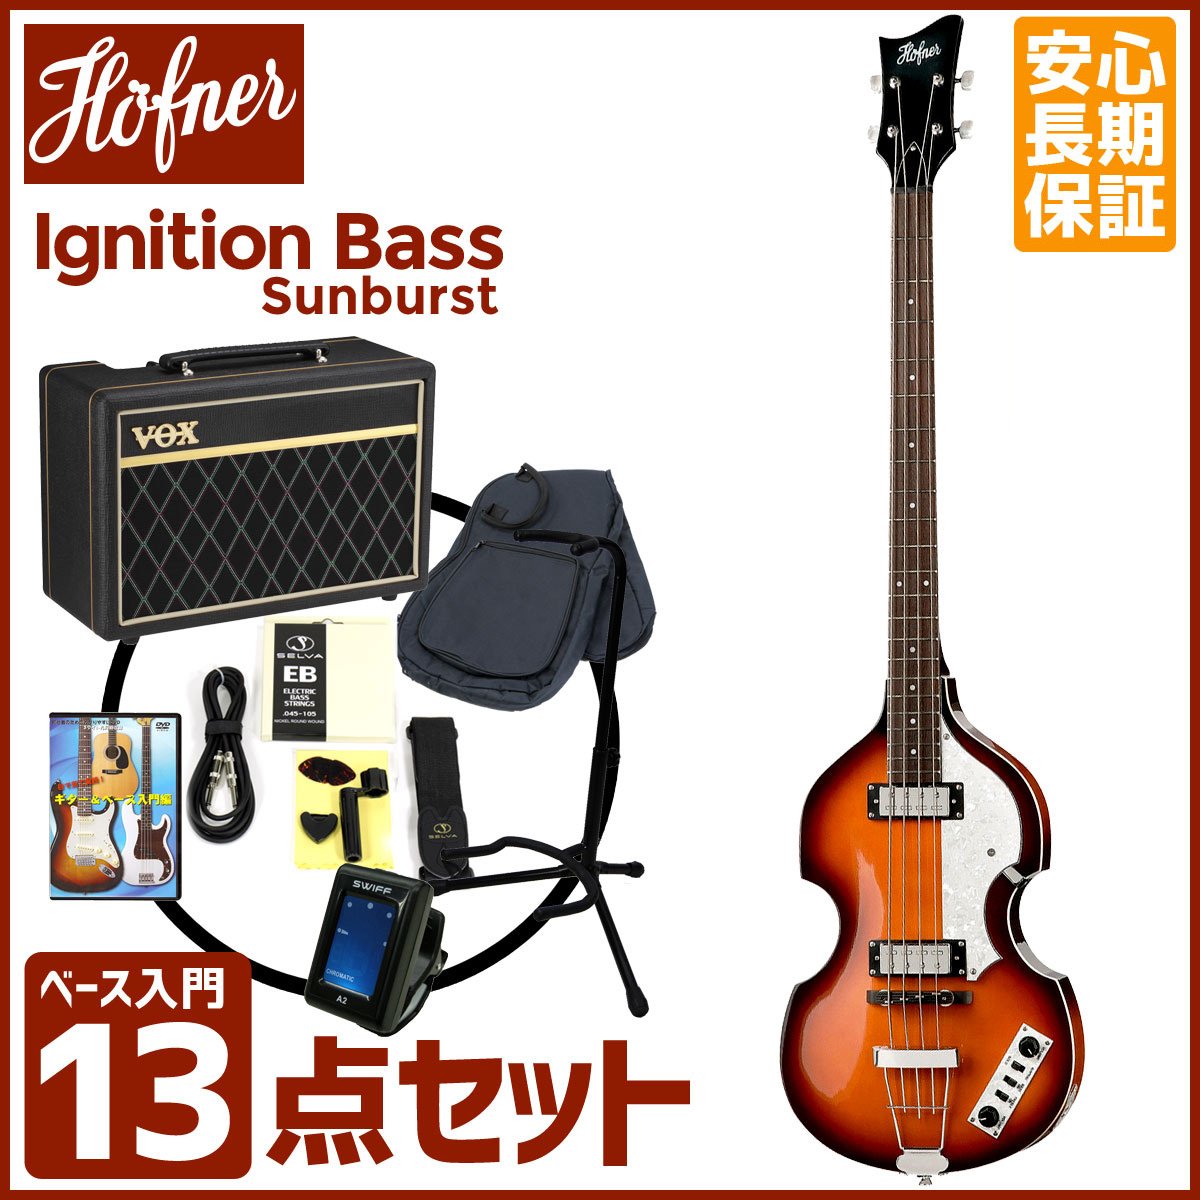 Hofner / Ignition Bass Sunburst スターターセット ヘフナー